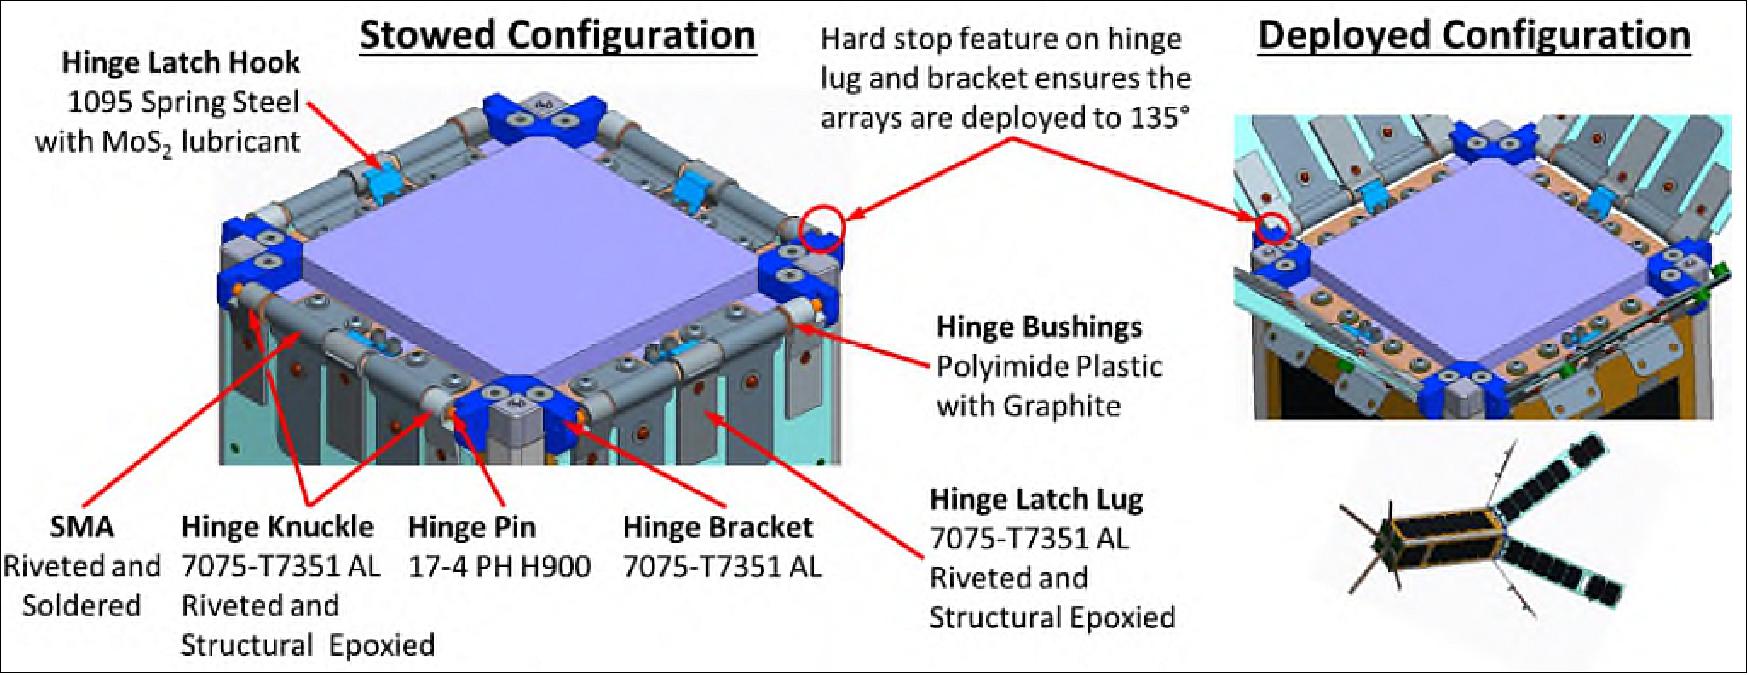 Figure 4: Hinge component parts and design (image credit: NASA/GRC)